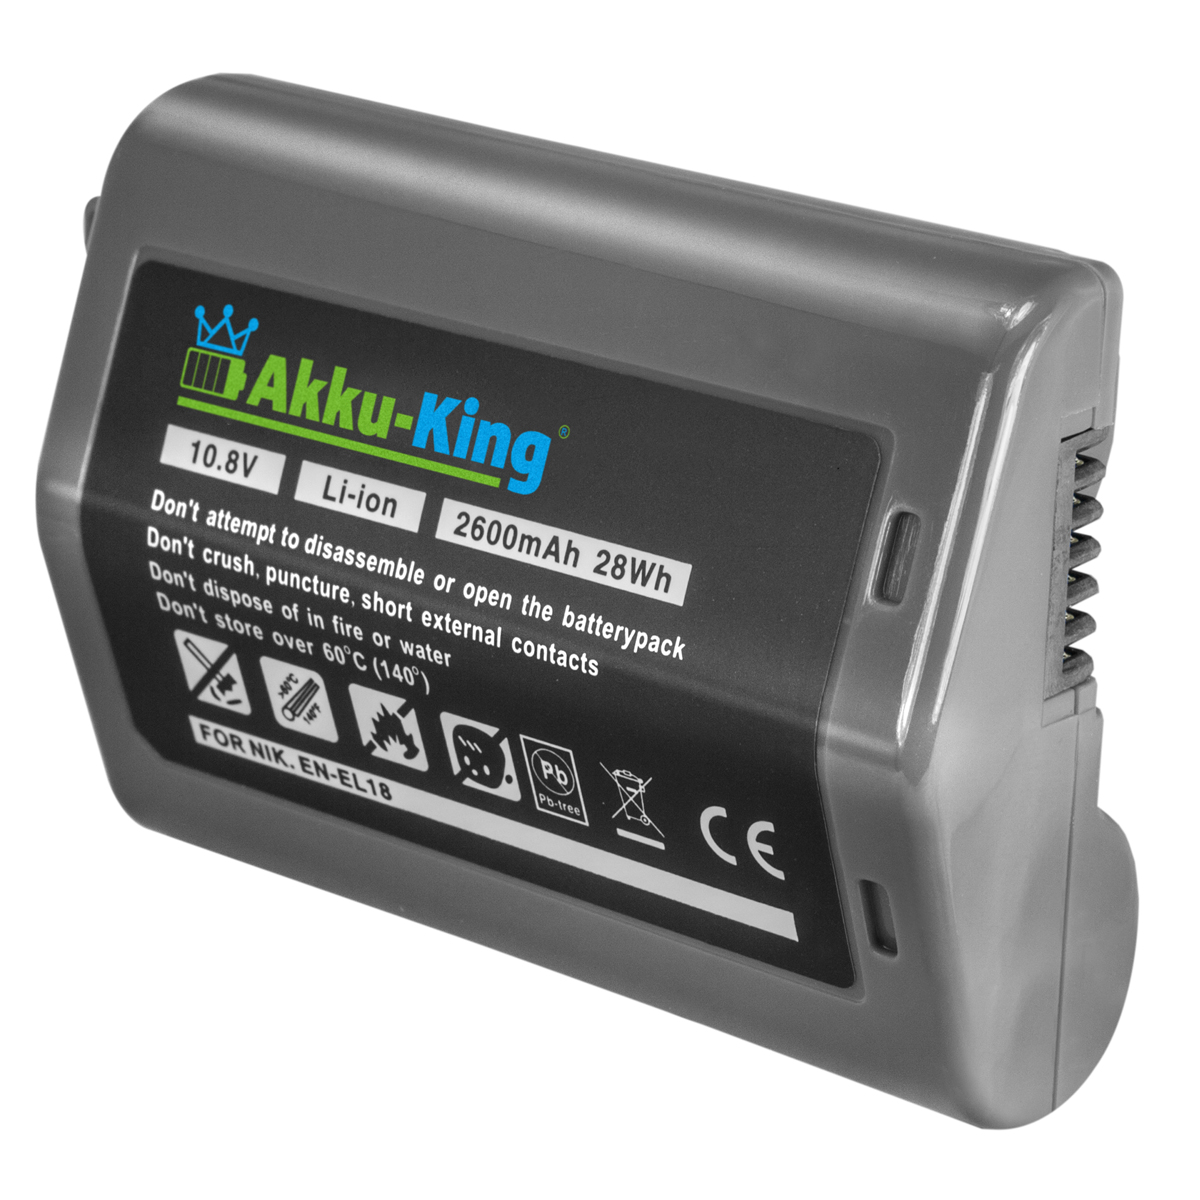 AKKU-KING Akku kompatibel mit 10.8 Kamera-Akku, 2600mAh Nikon Li-Ion Volt, EN-EL18